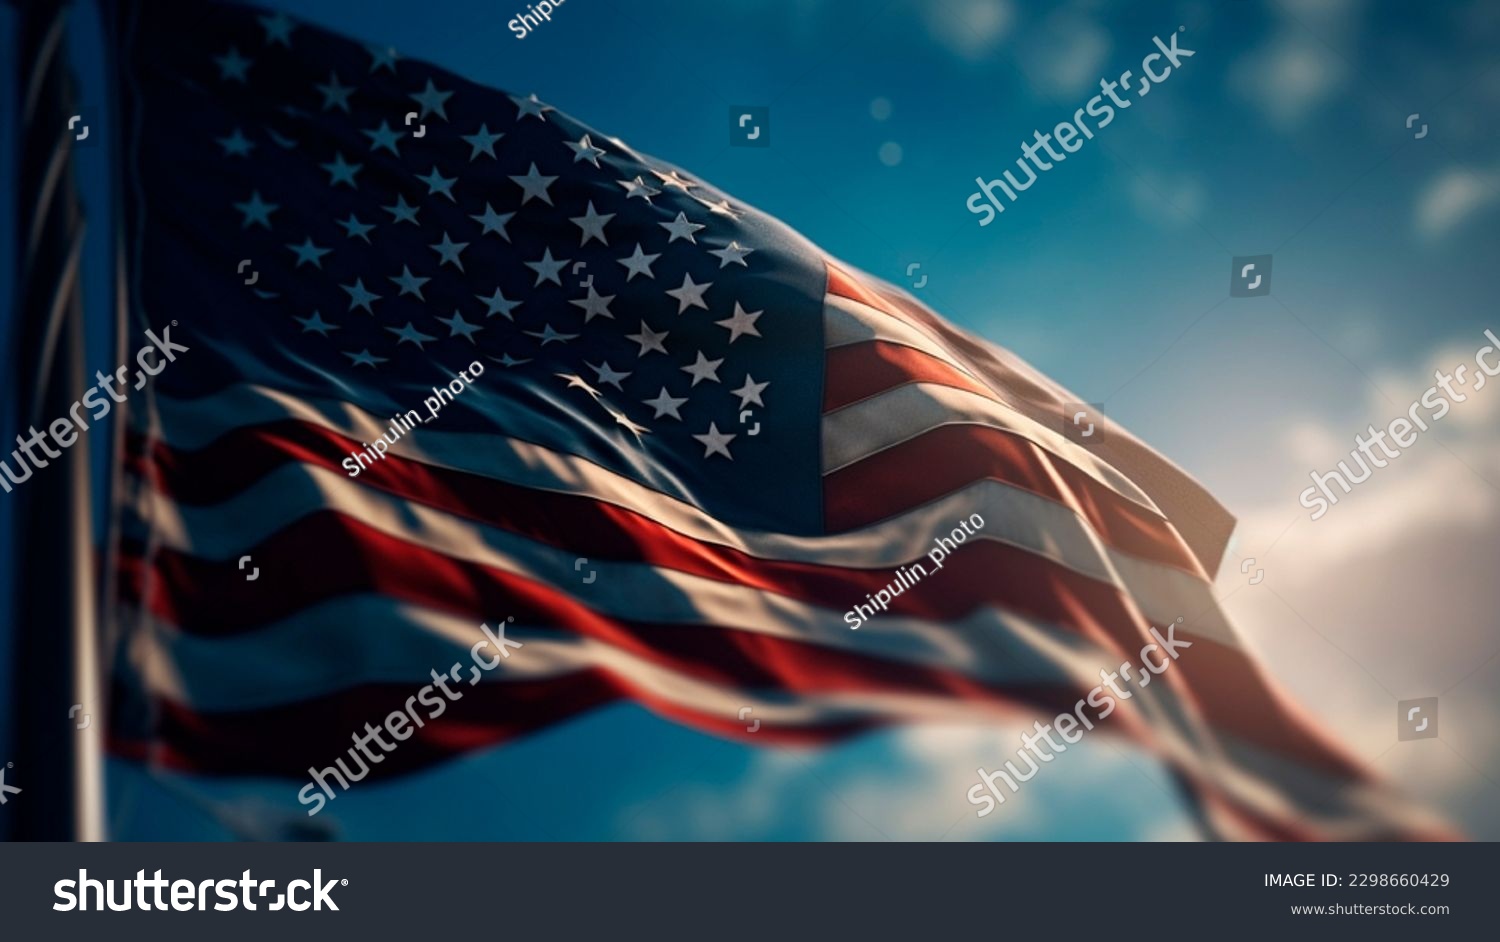 National flag day. America. United States of America. Bright, festive stylized illustration. Greeting card. national flag day.  #2298660429